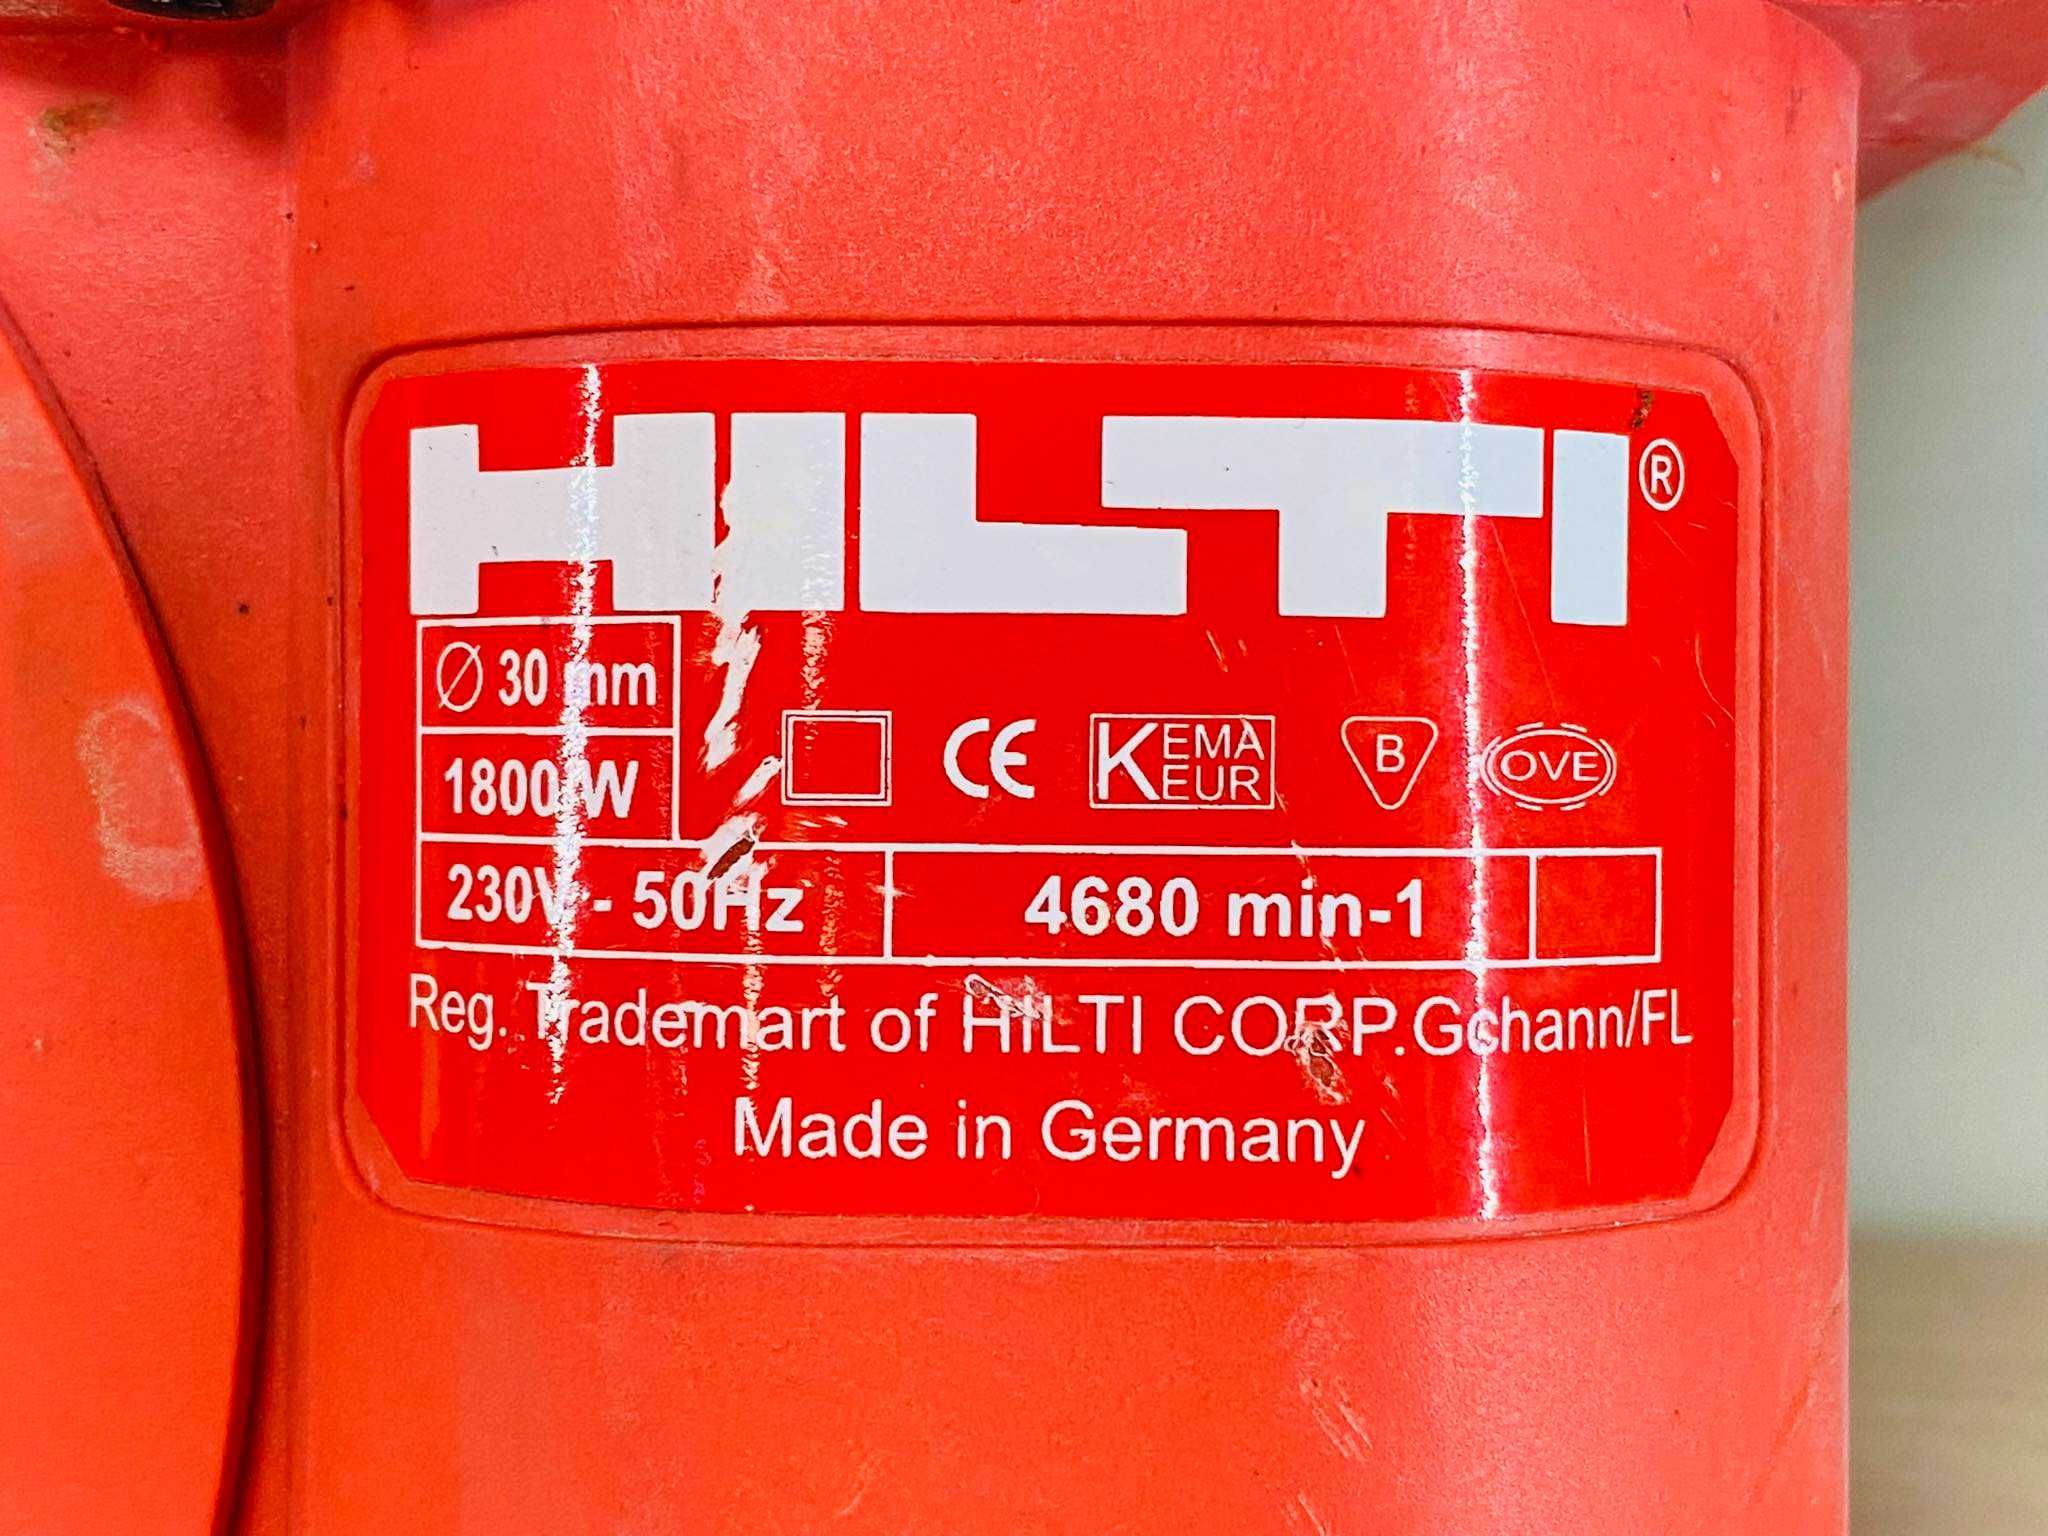 Młotowiertarka Hilti Hammer 1800W230V - 50Hz